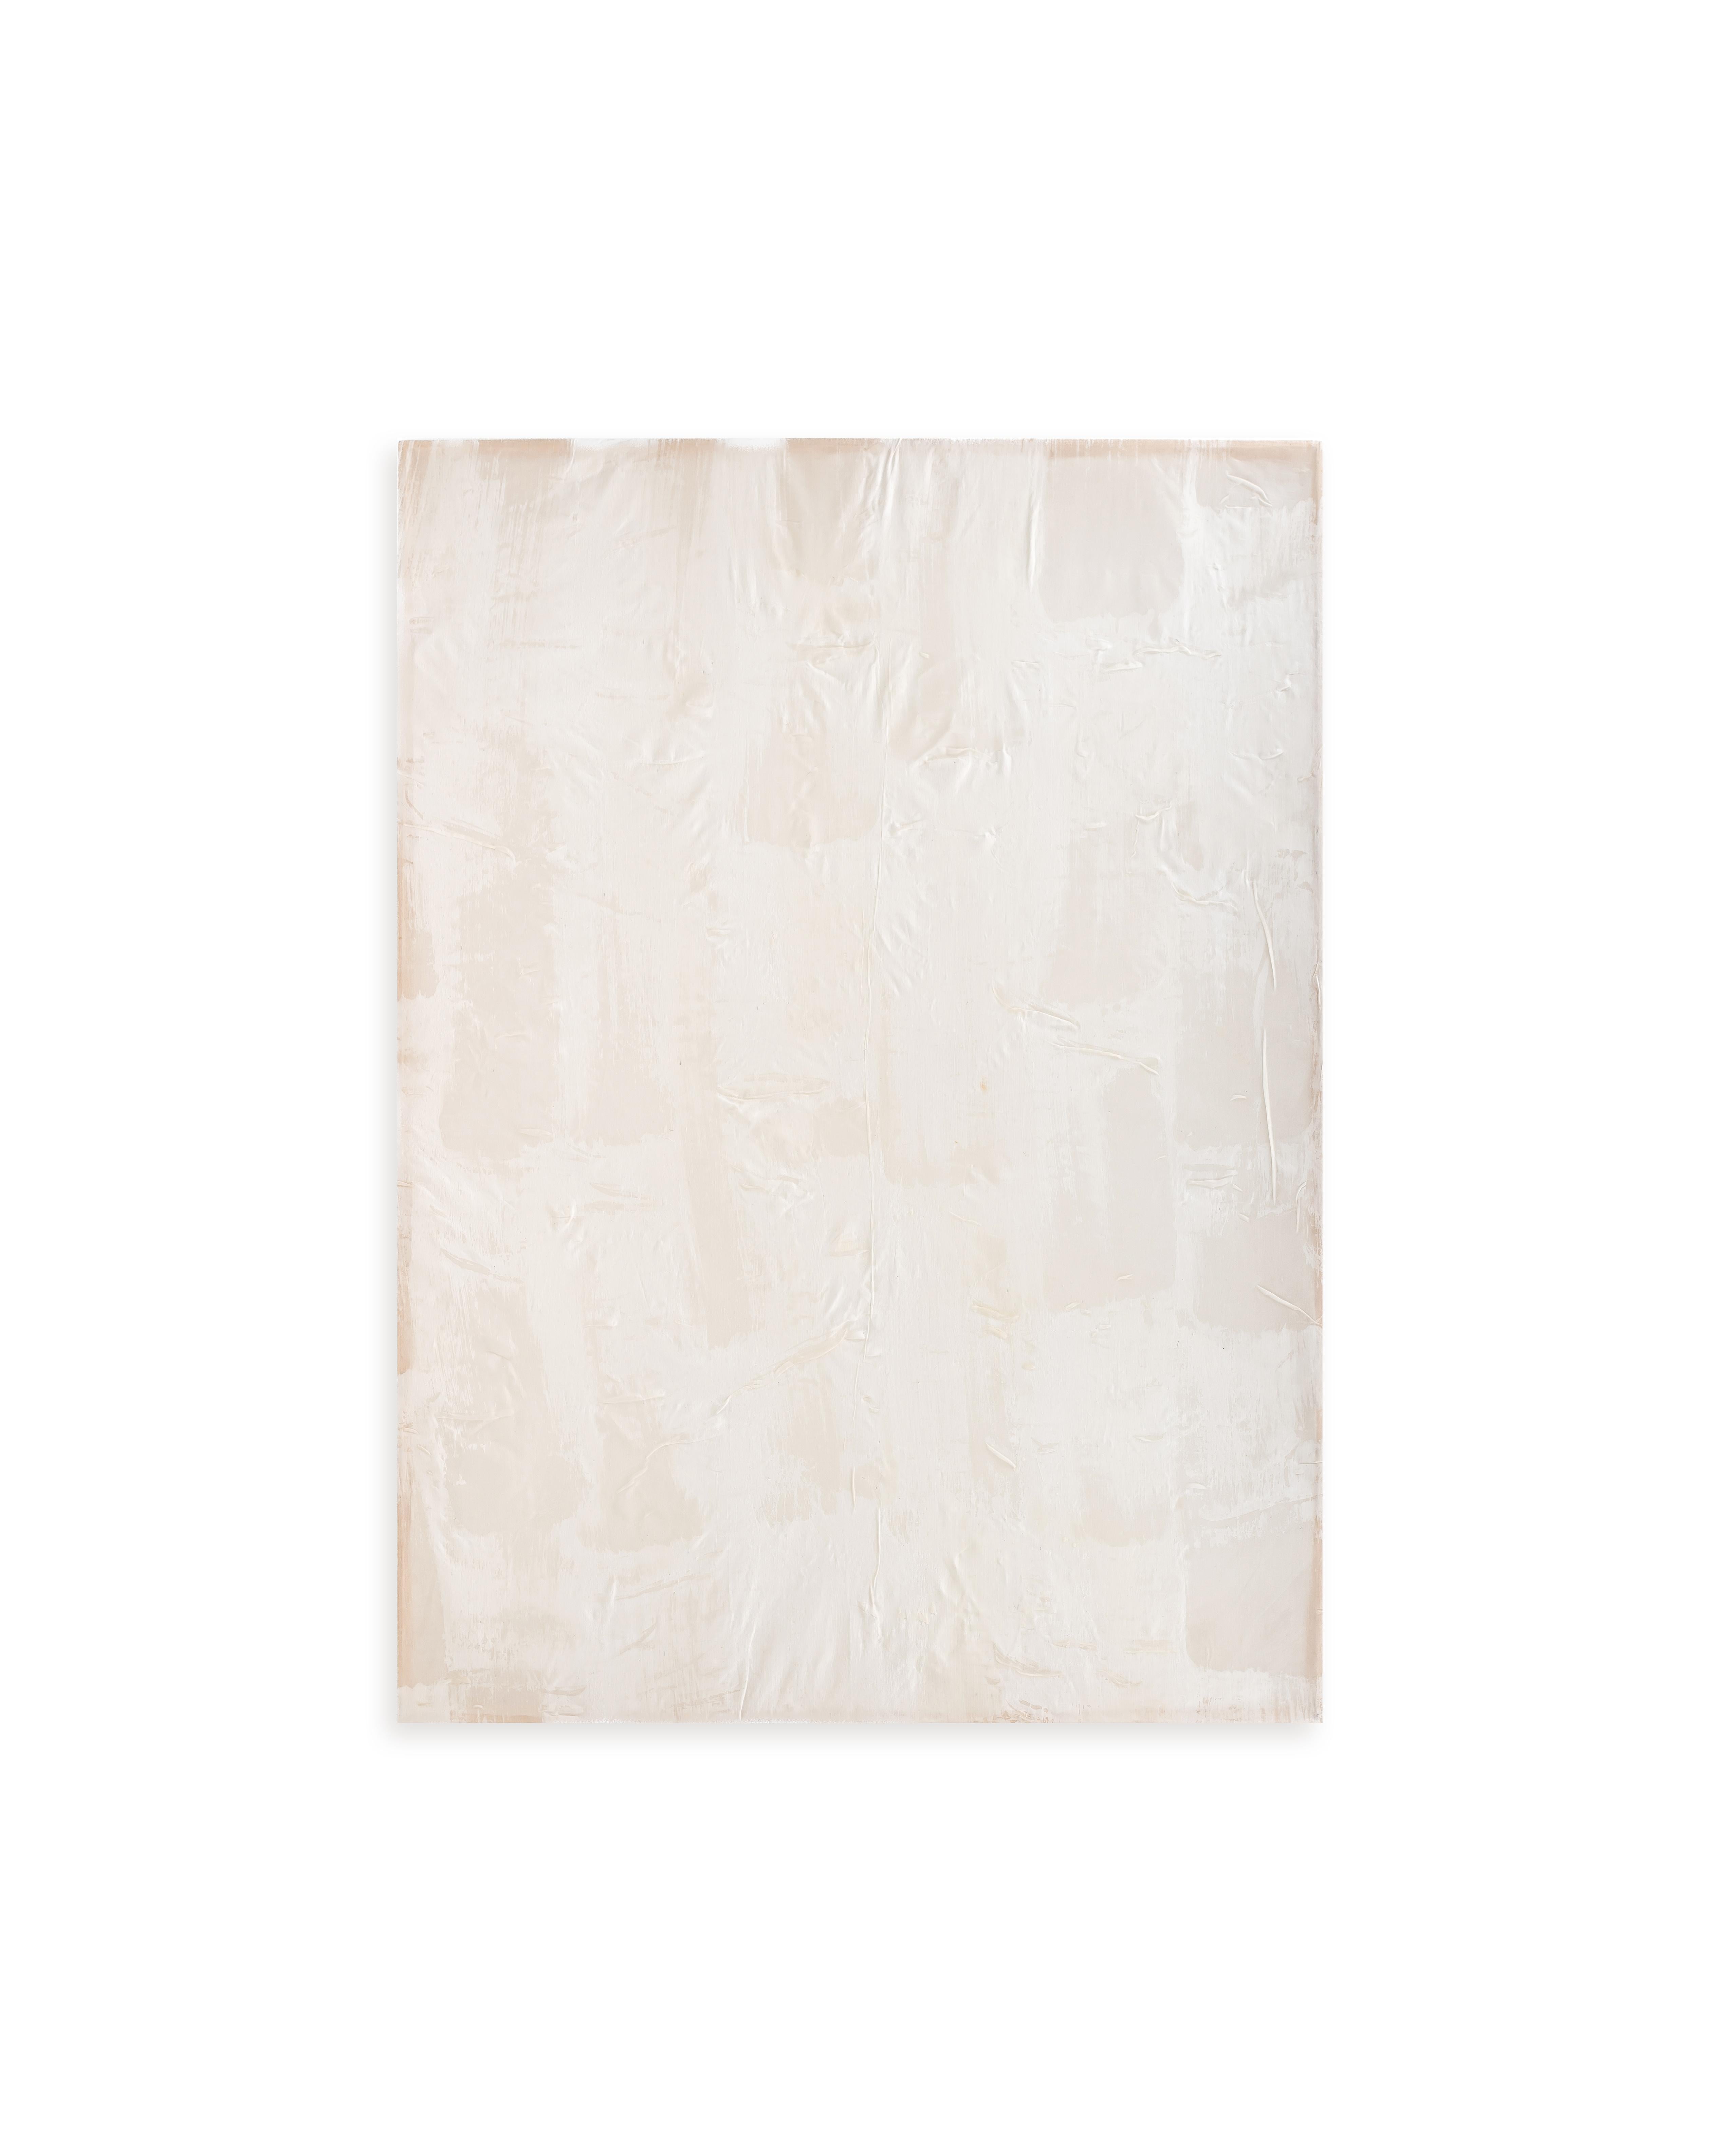 Cristina Loya Domingo Abstract Painting - UNTITLED 0.5 – beeswax on silk, natural materials, ecologies, minimal/abstract